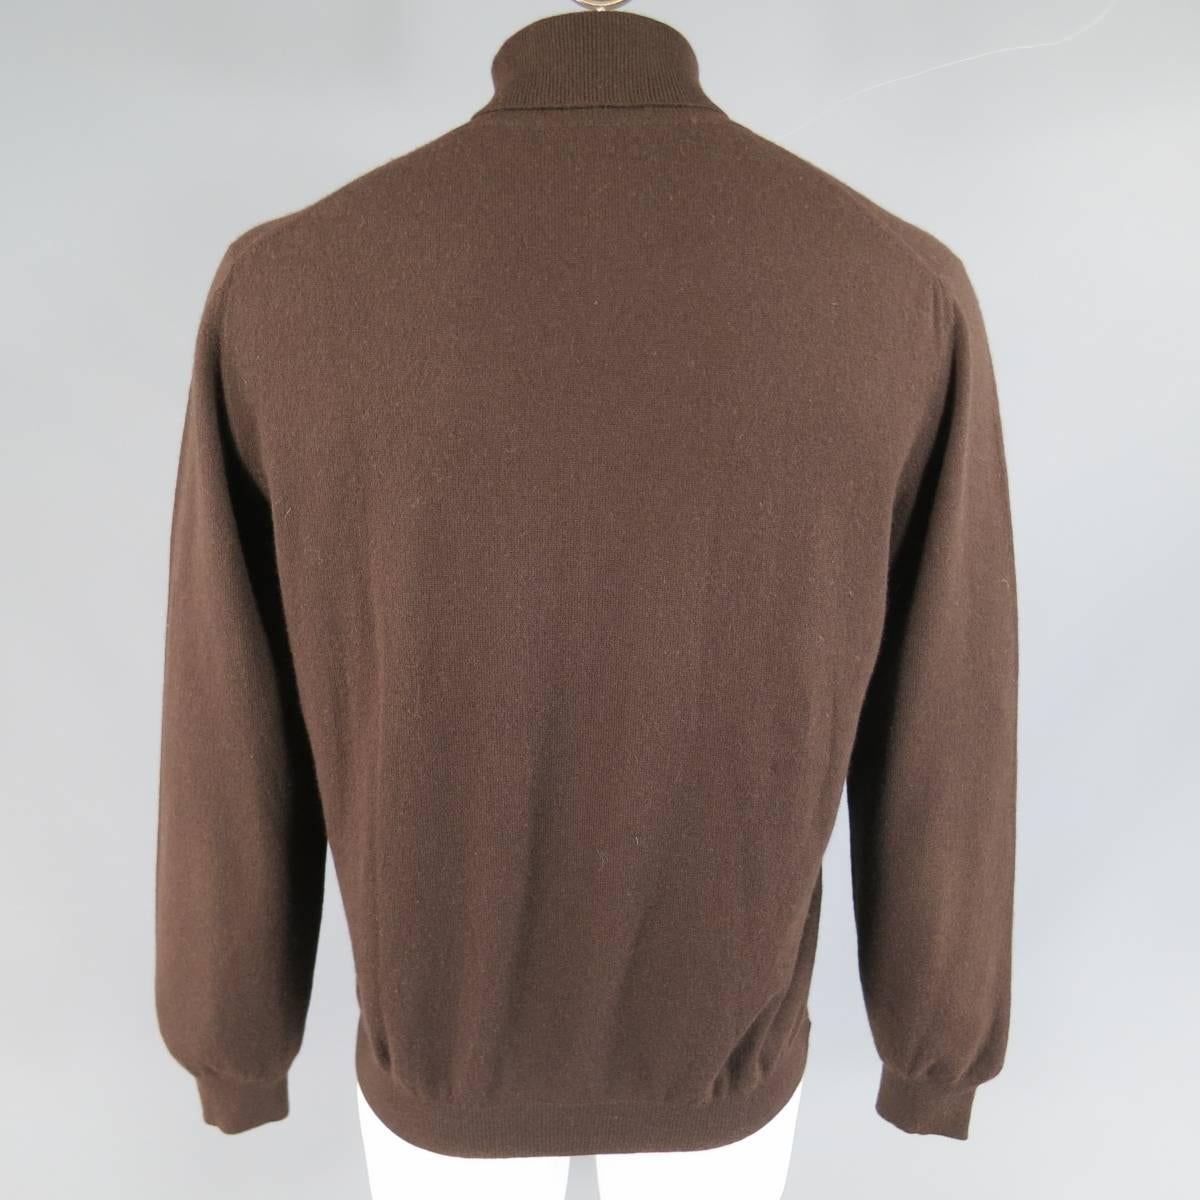 chocolate brown turtleneck sweater